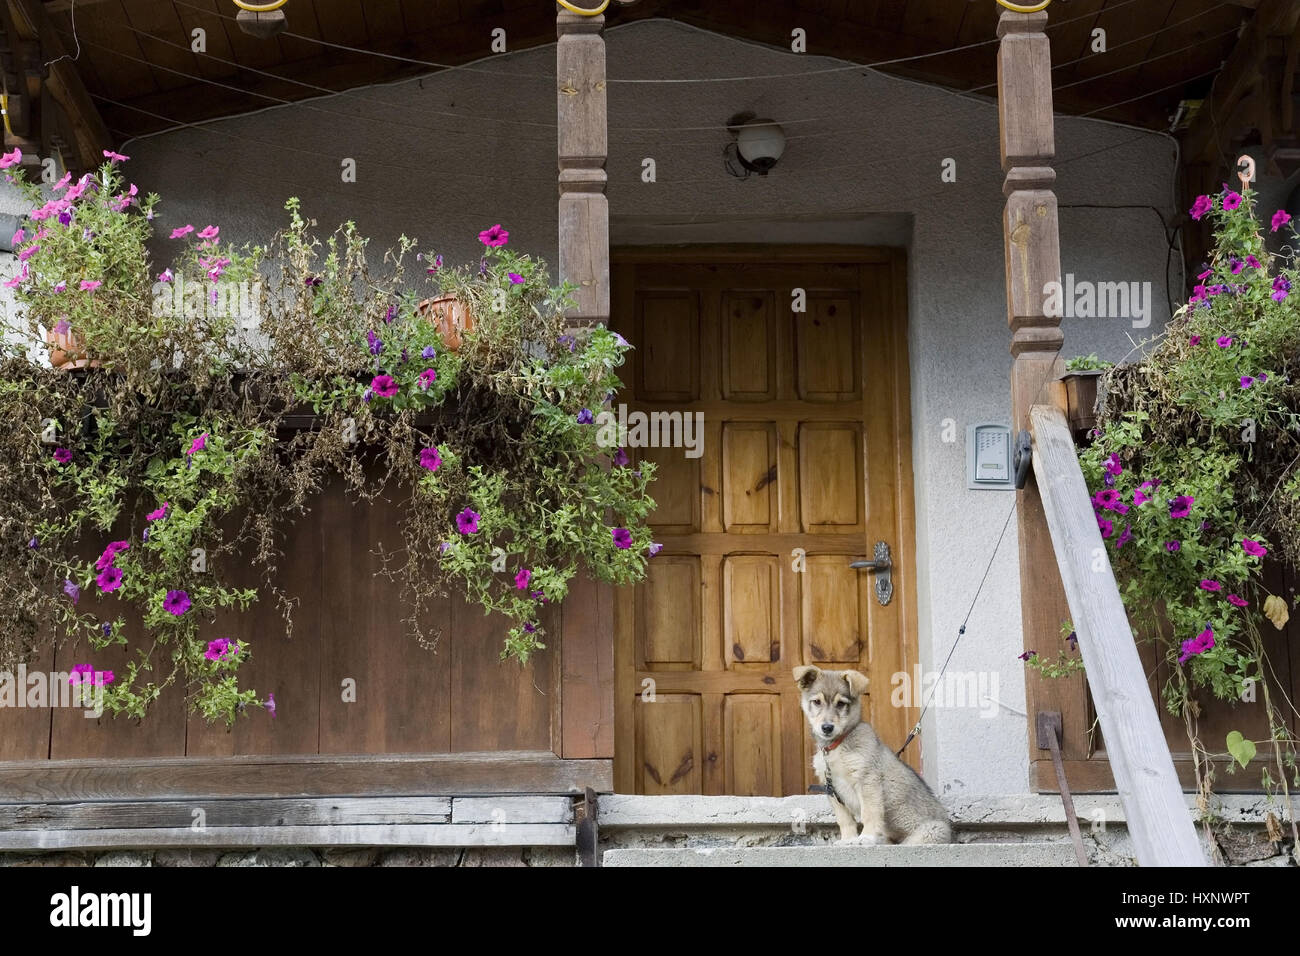 Young dog guards a house in the place Krutyn. Poland Masuria, Junger Hund bewacht ein Haus in der Ortschaft Krutyn.Polen Masuren Stock Photo